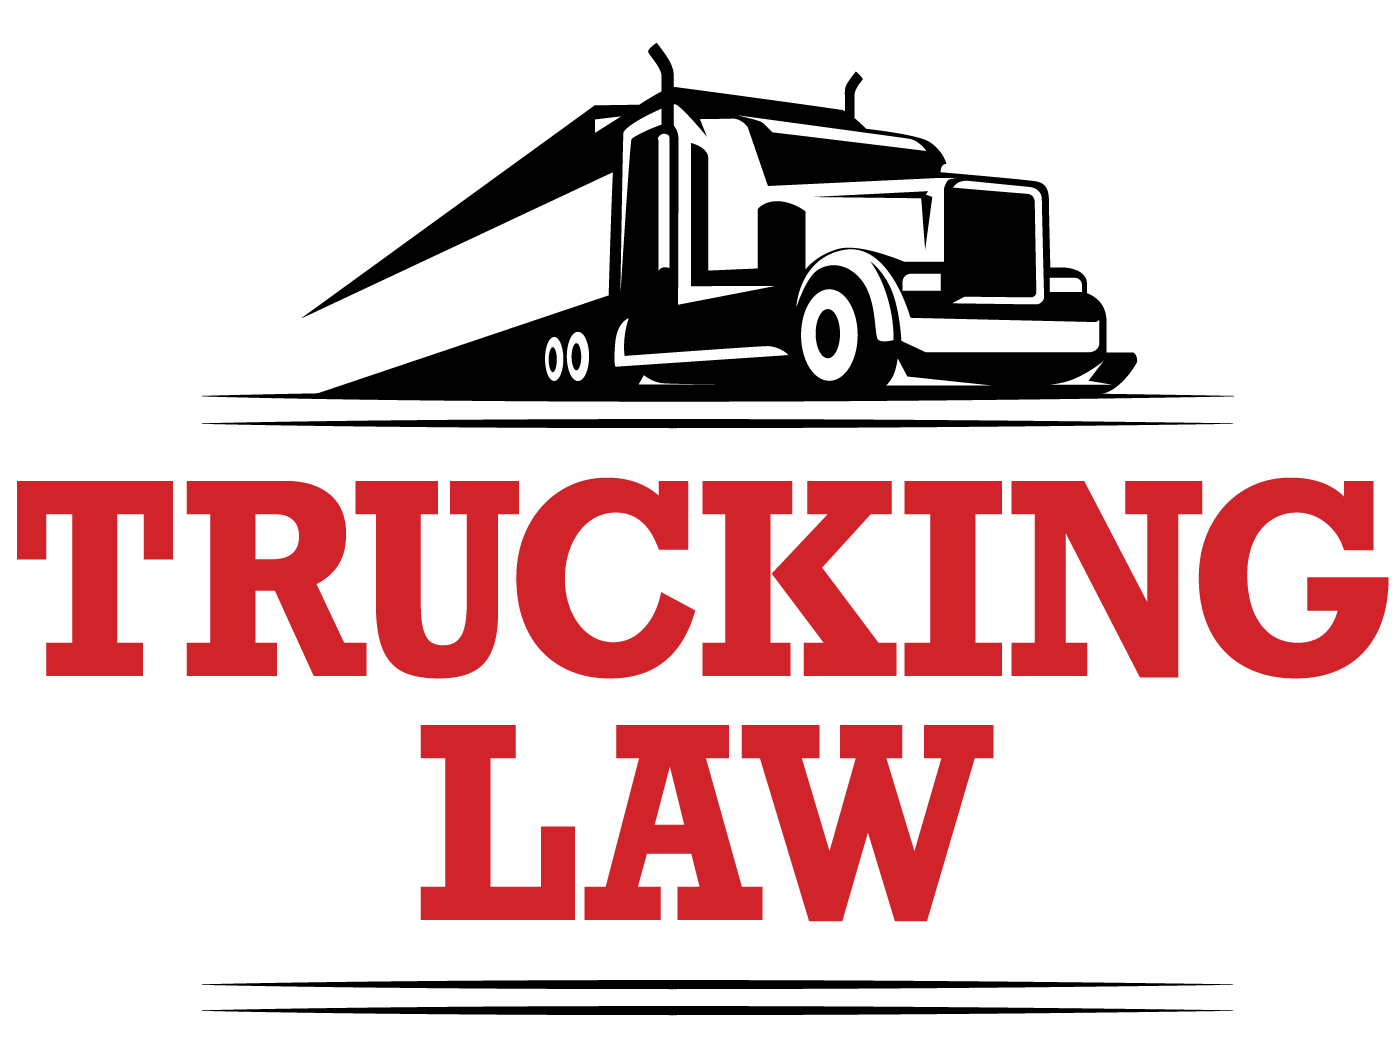 Trucking law logo